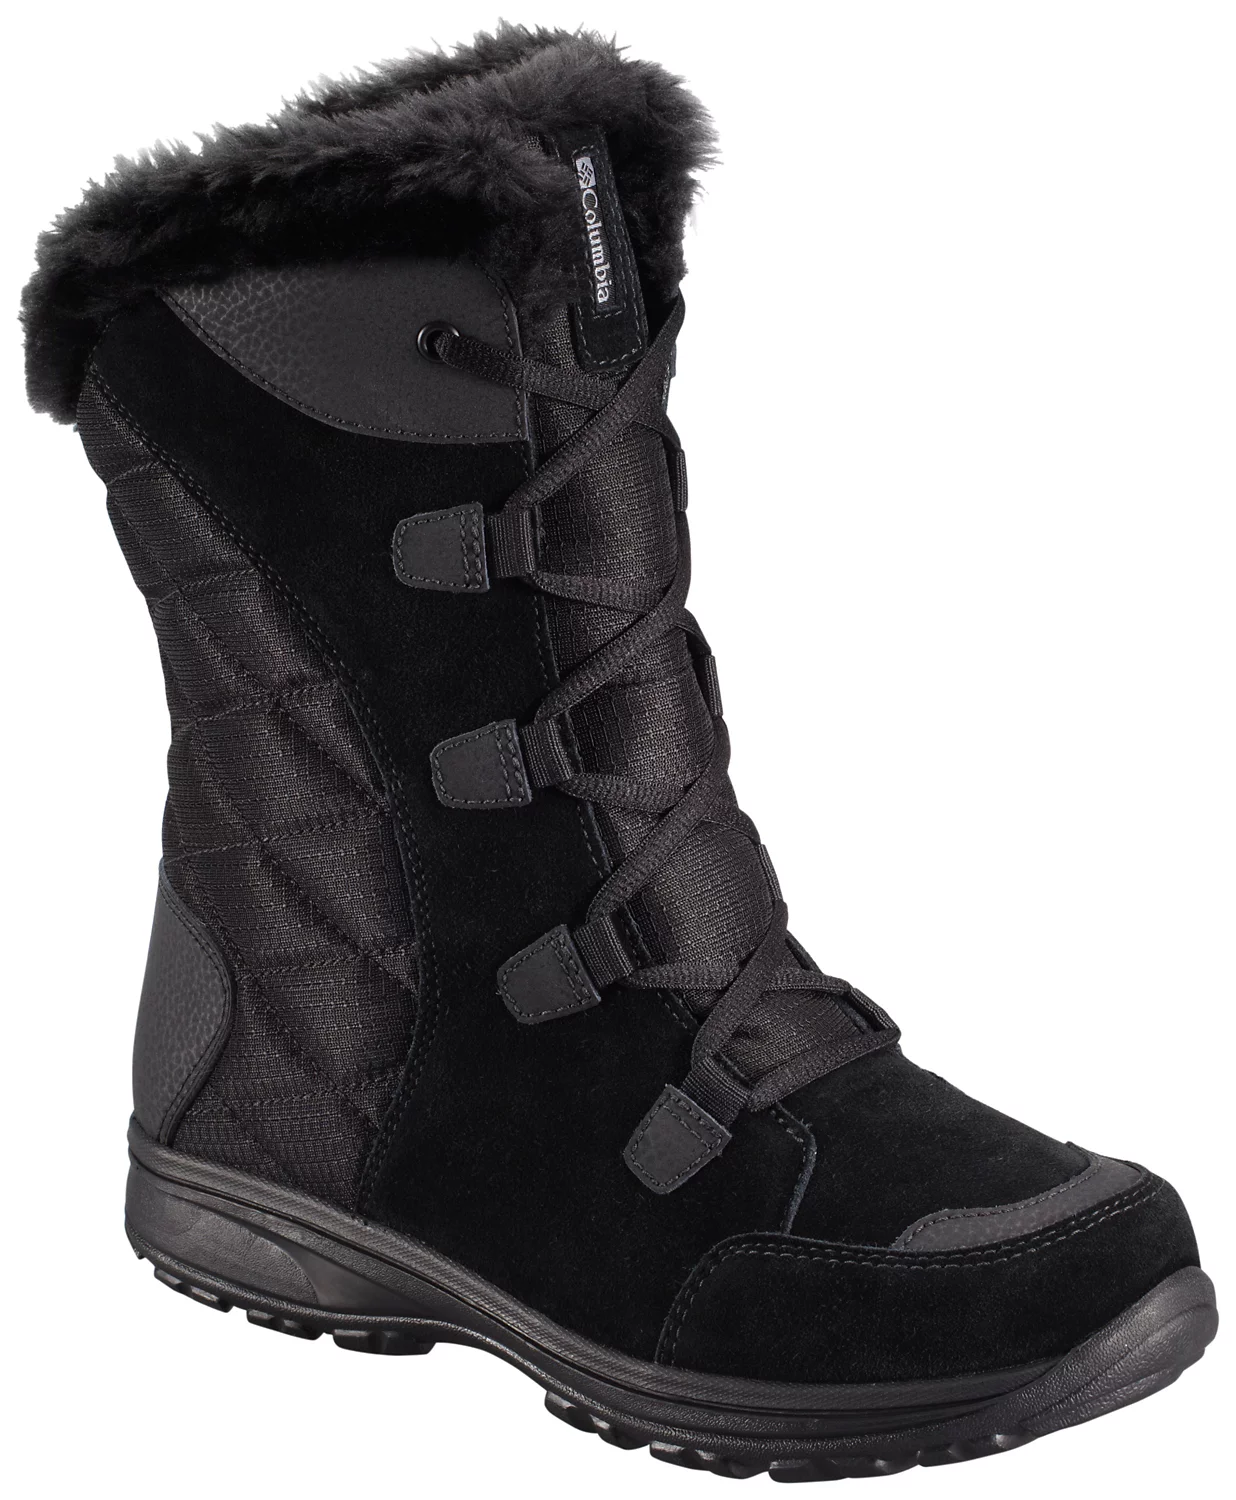 Women's Winter Boots & Waterproof Boots | Academy